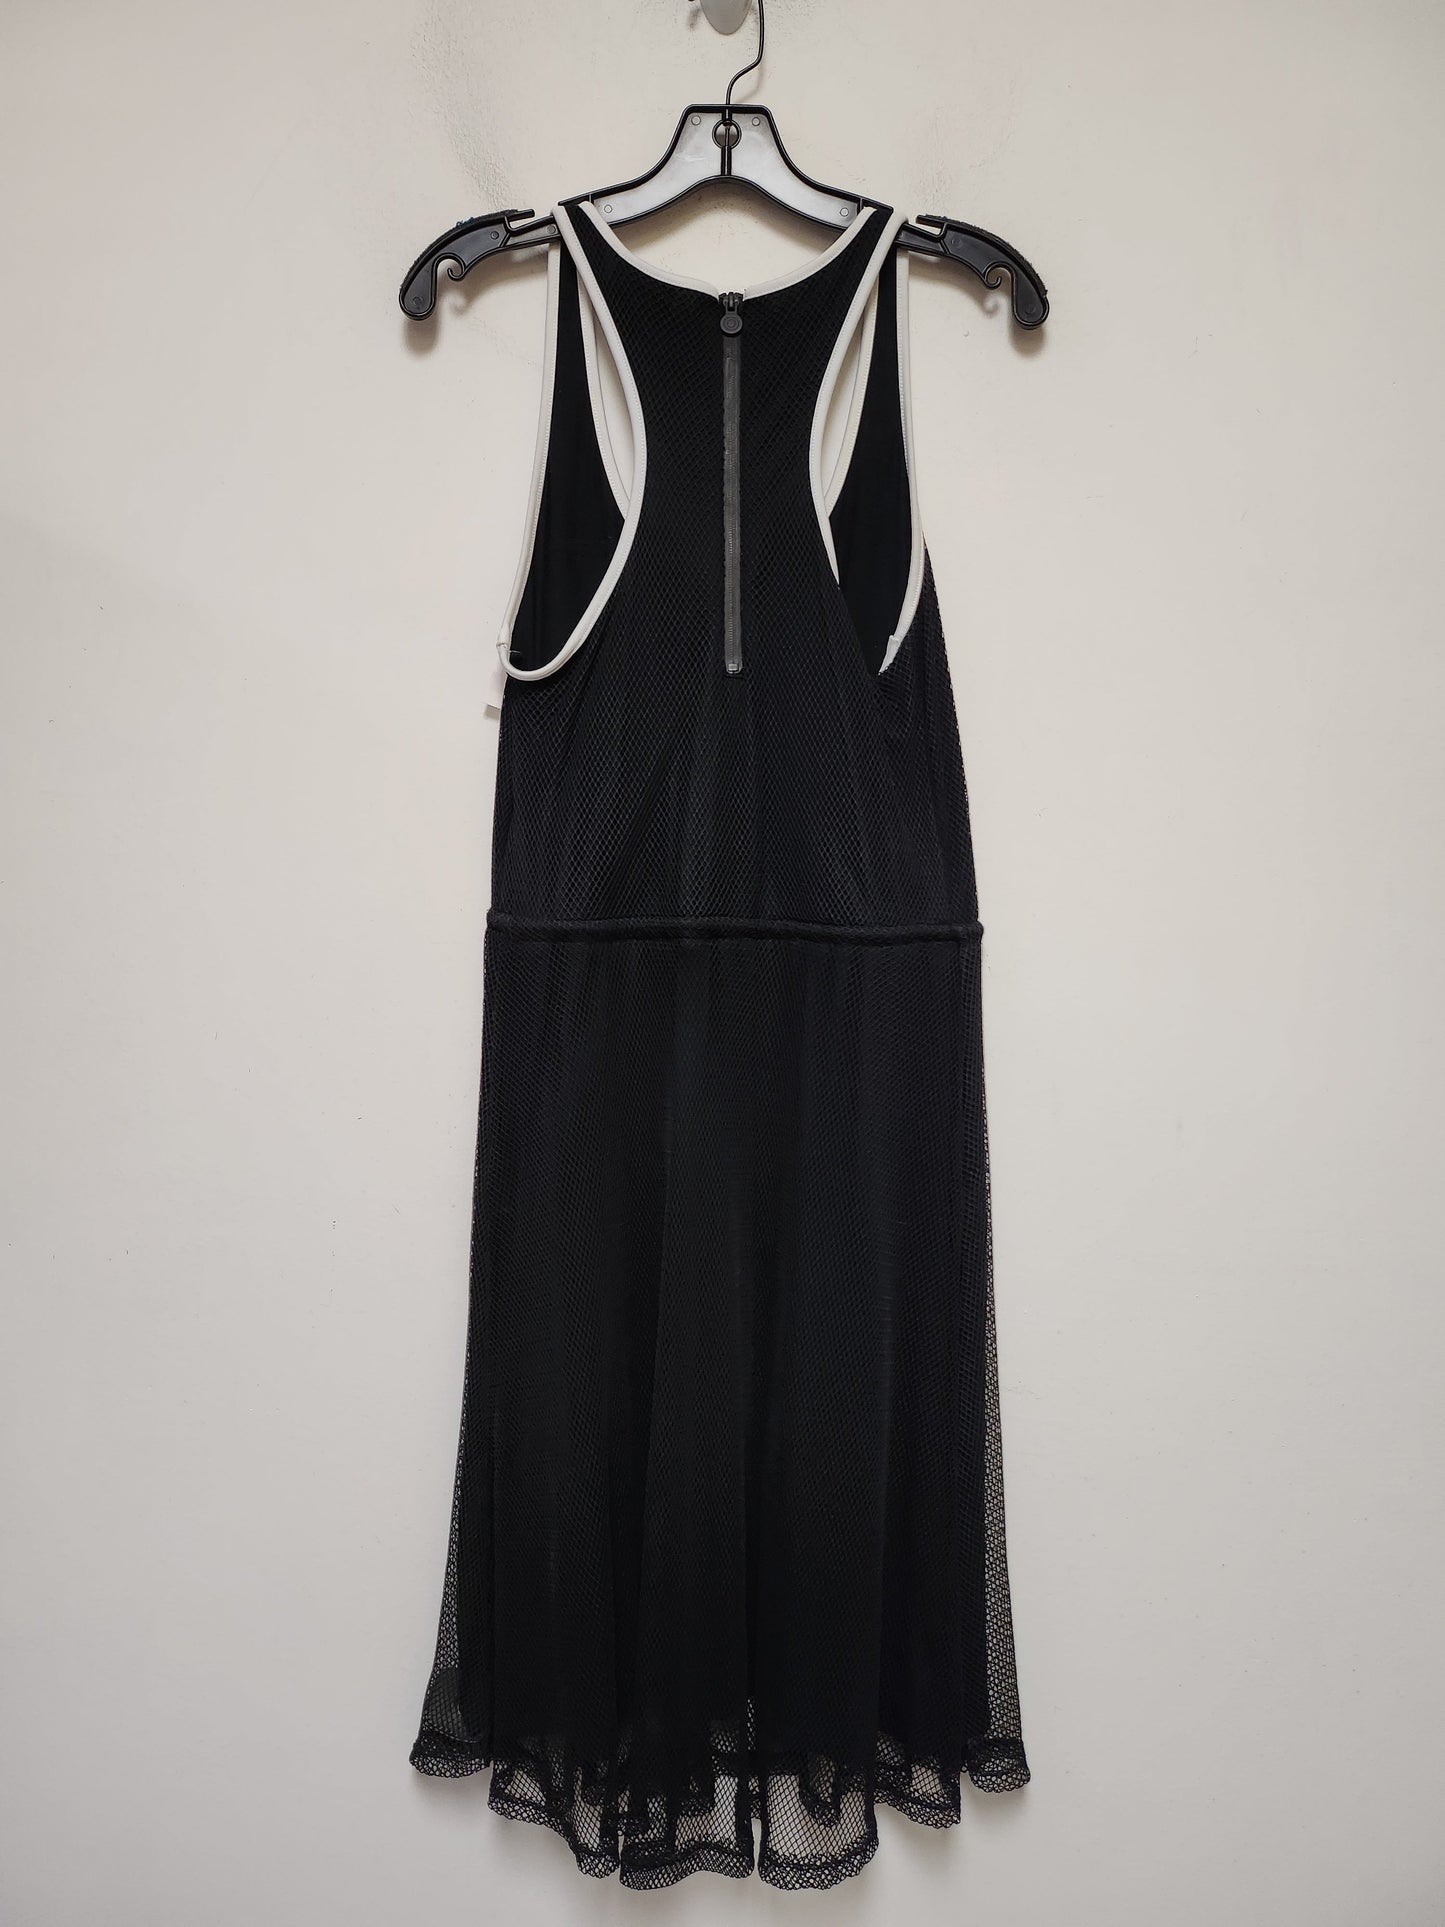 Black & White Dress Casual Midi Target-designer, Size Xs